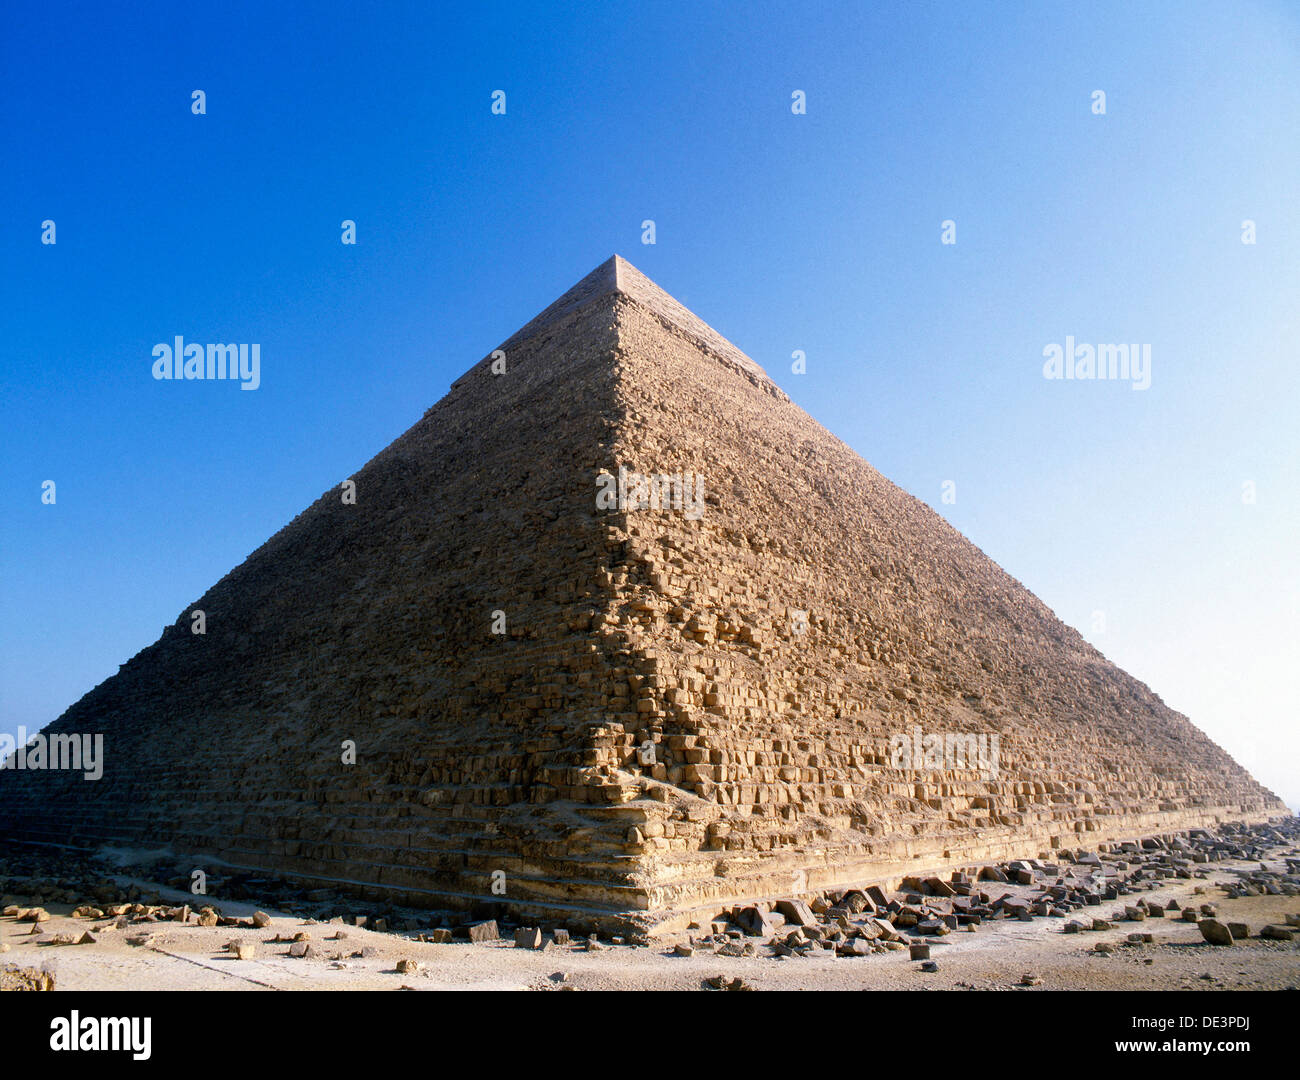 La pirámide de Khephren en Giza. Foto de stock